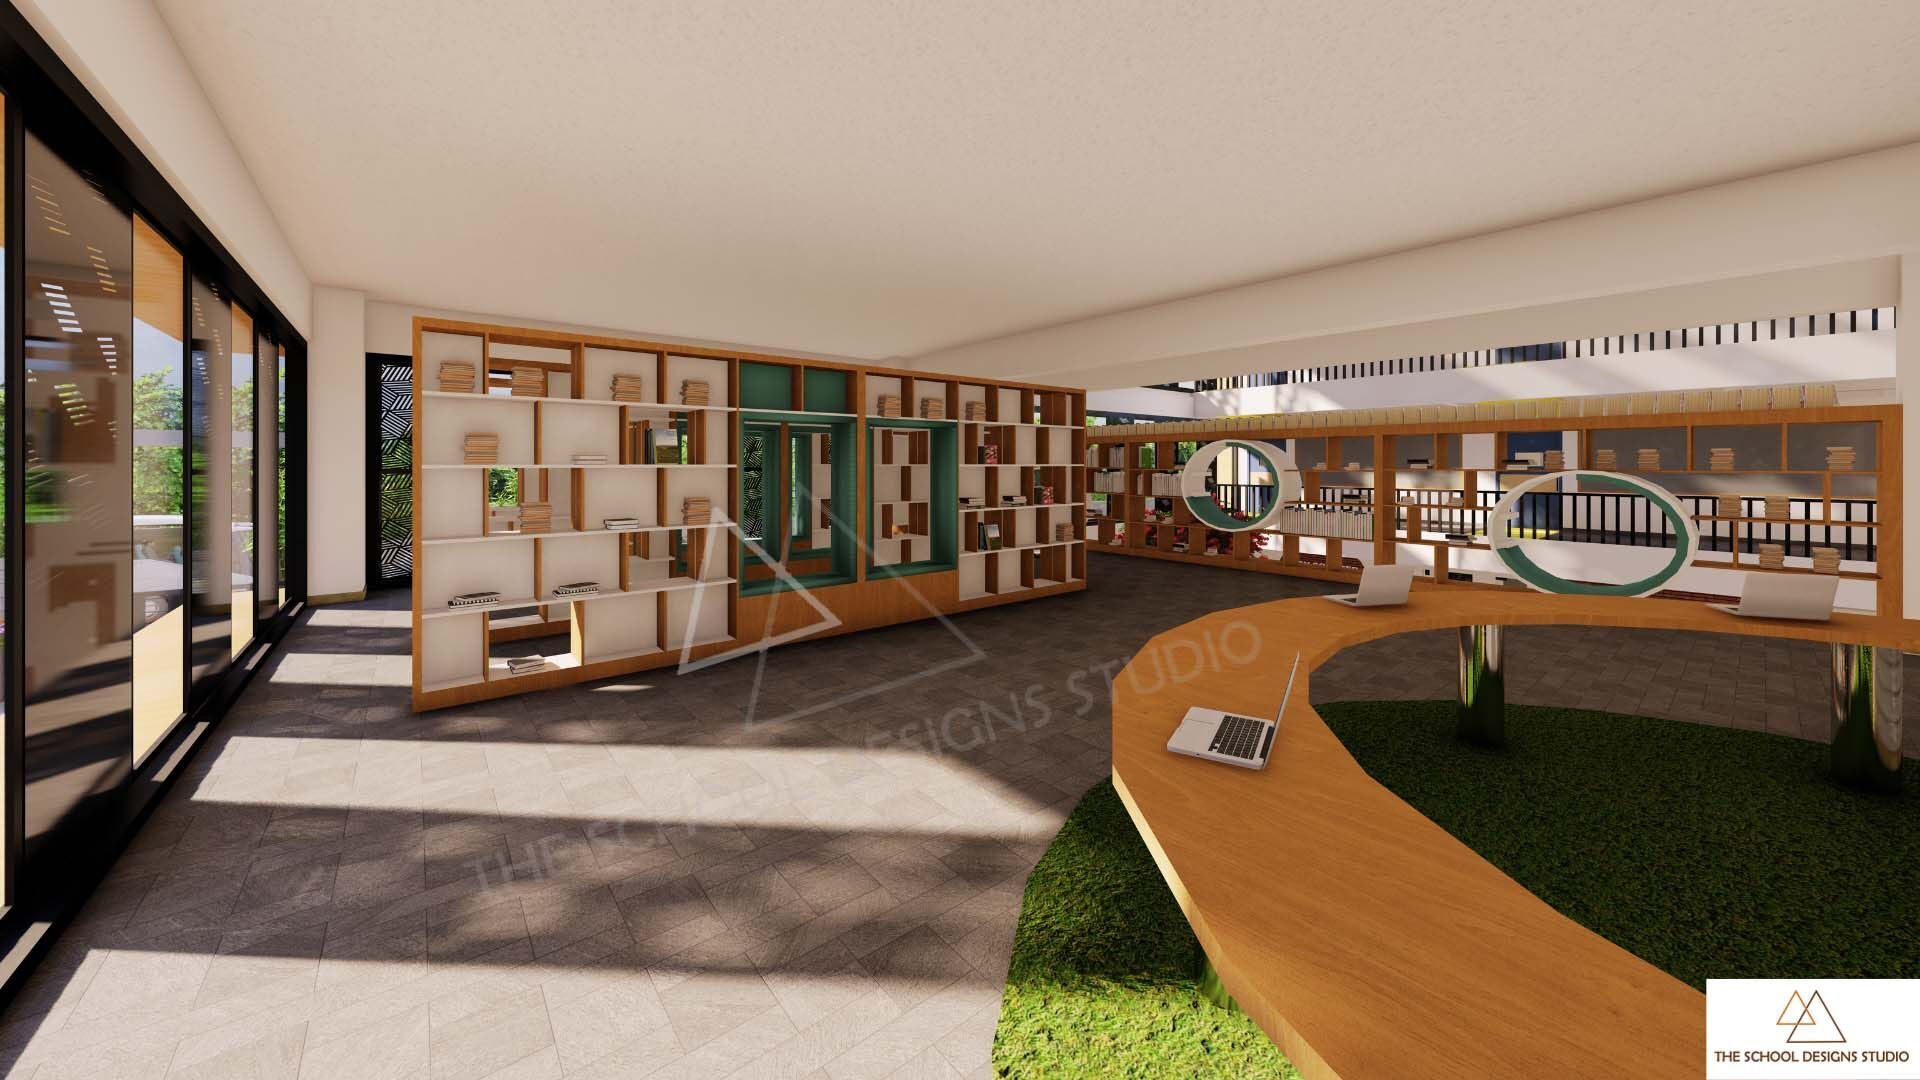 Pragati Vidyalaya, Challakere, Karnataka. Designed By The School Designs Studio (Top School Architects in India)- Library